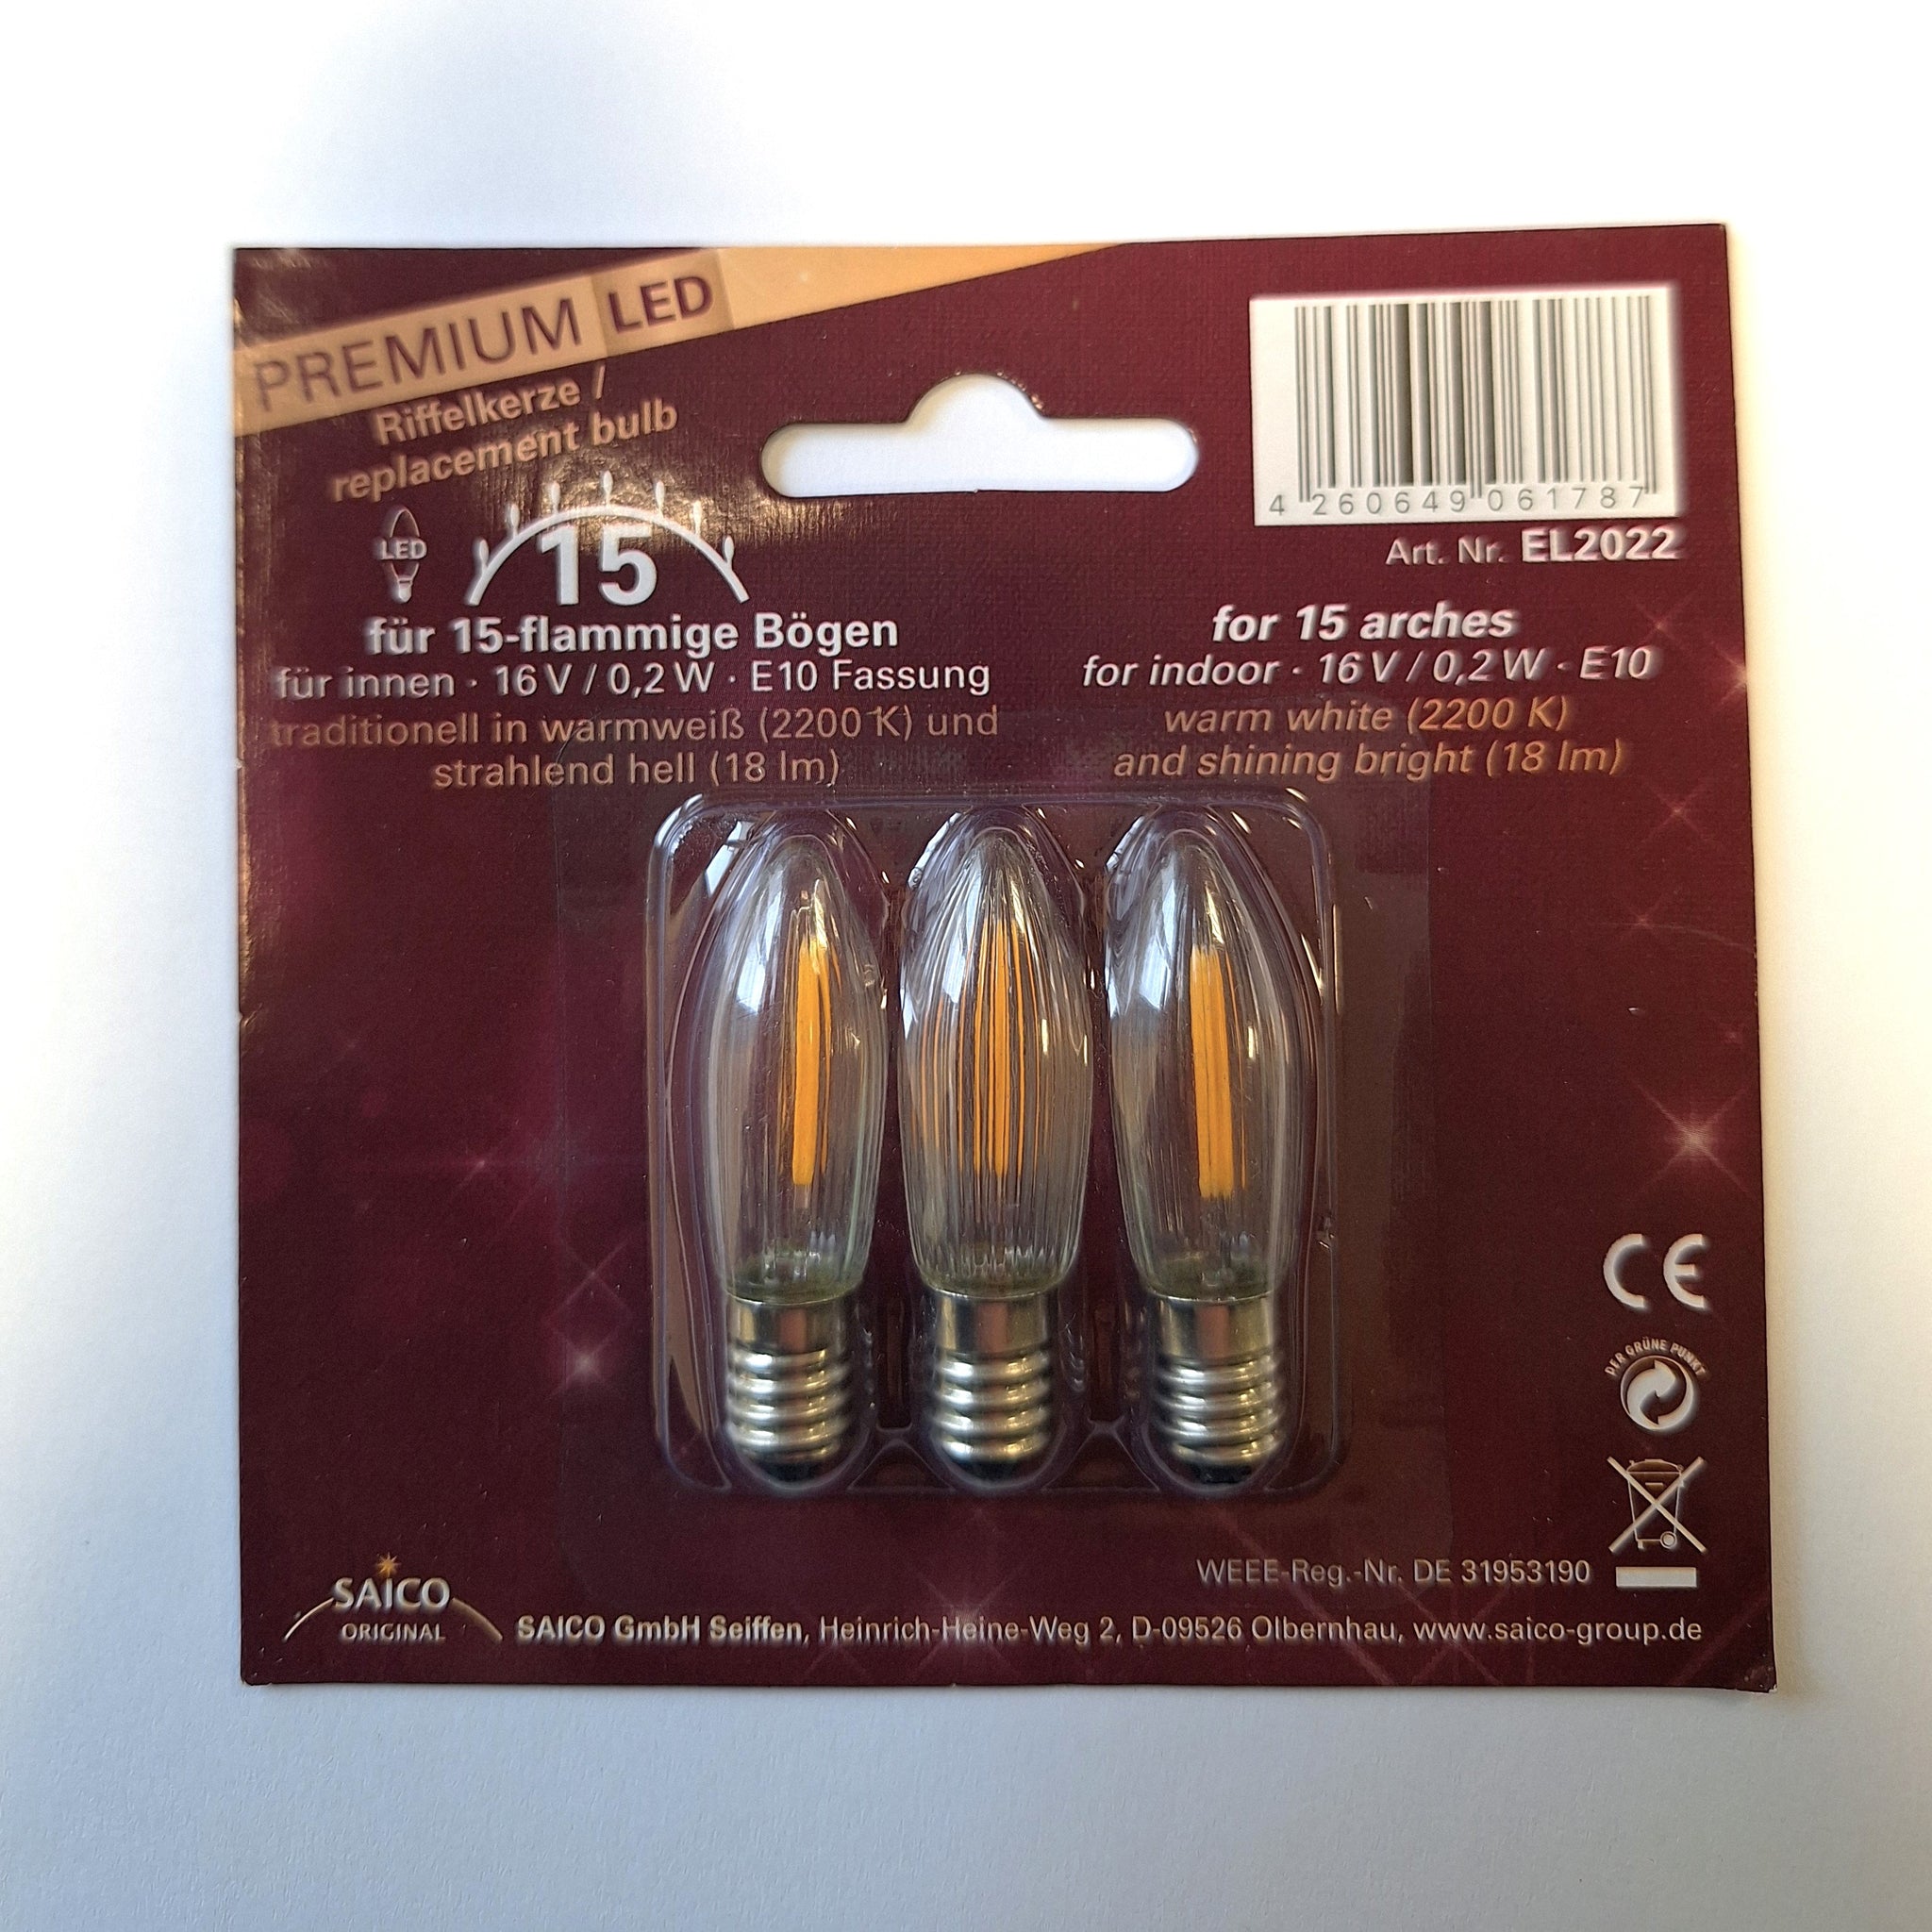 Premium LED replacement lamp 3x 16V - 0.2W - E10